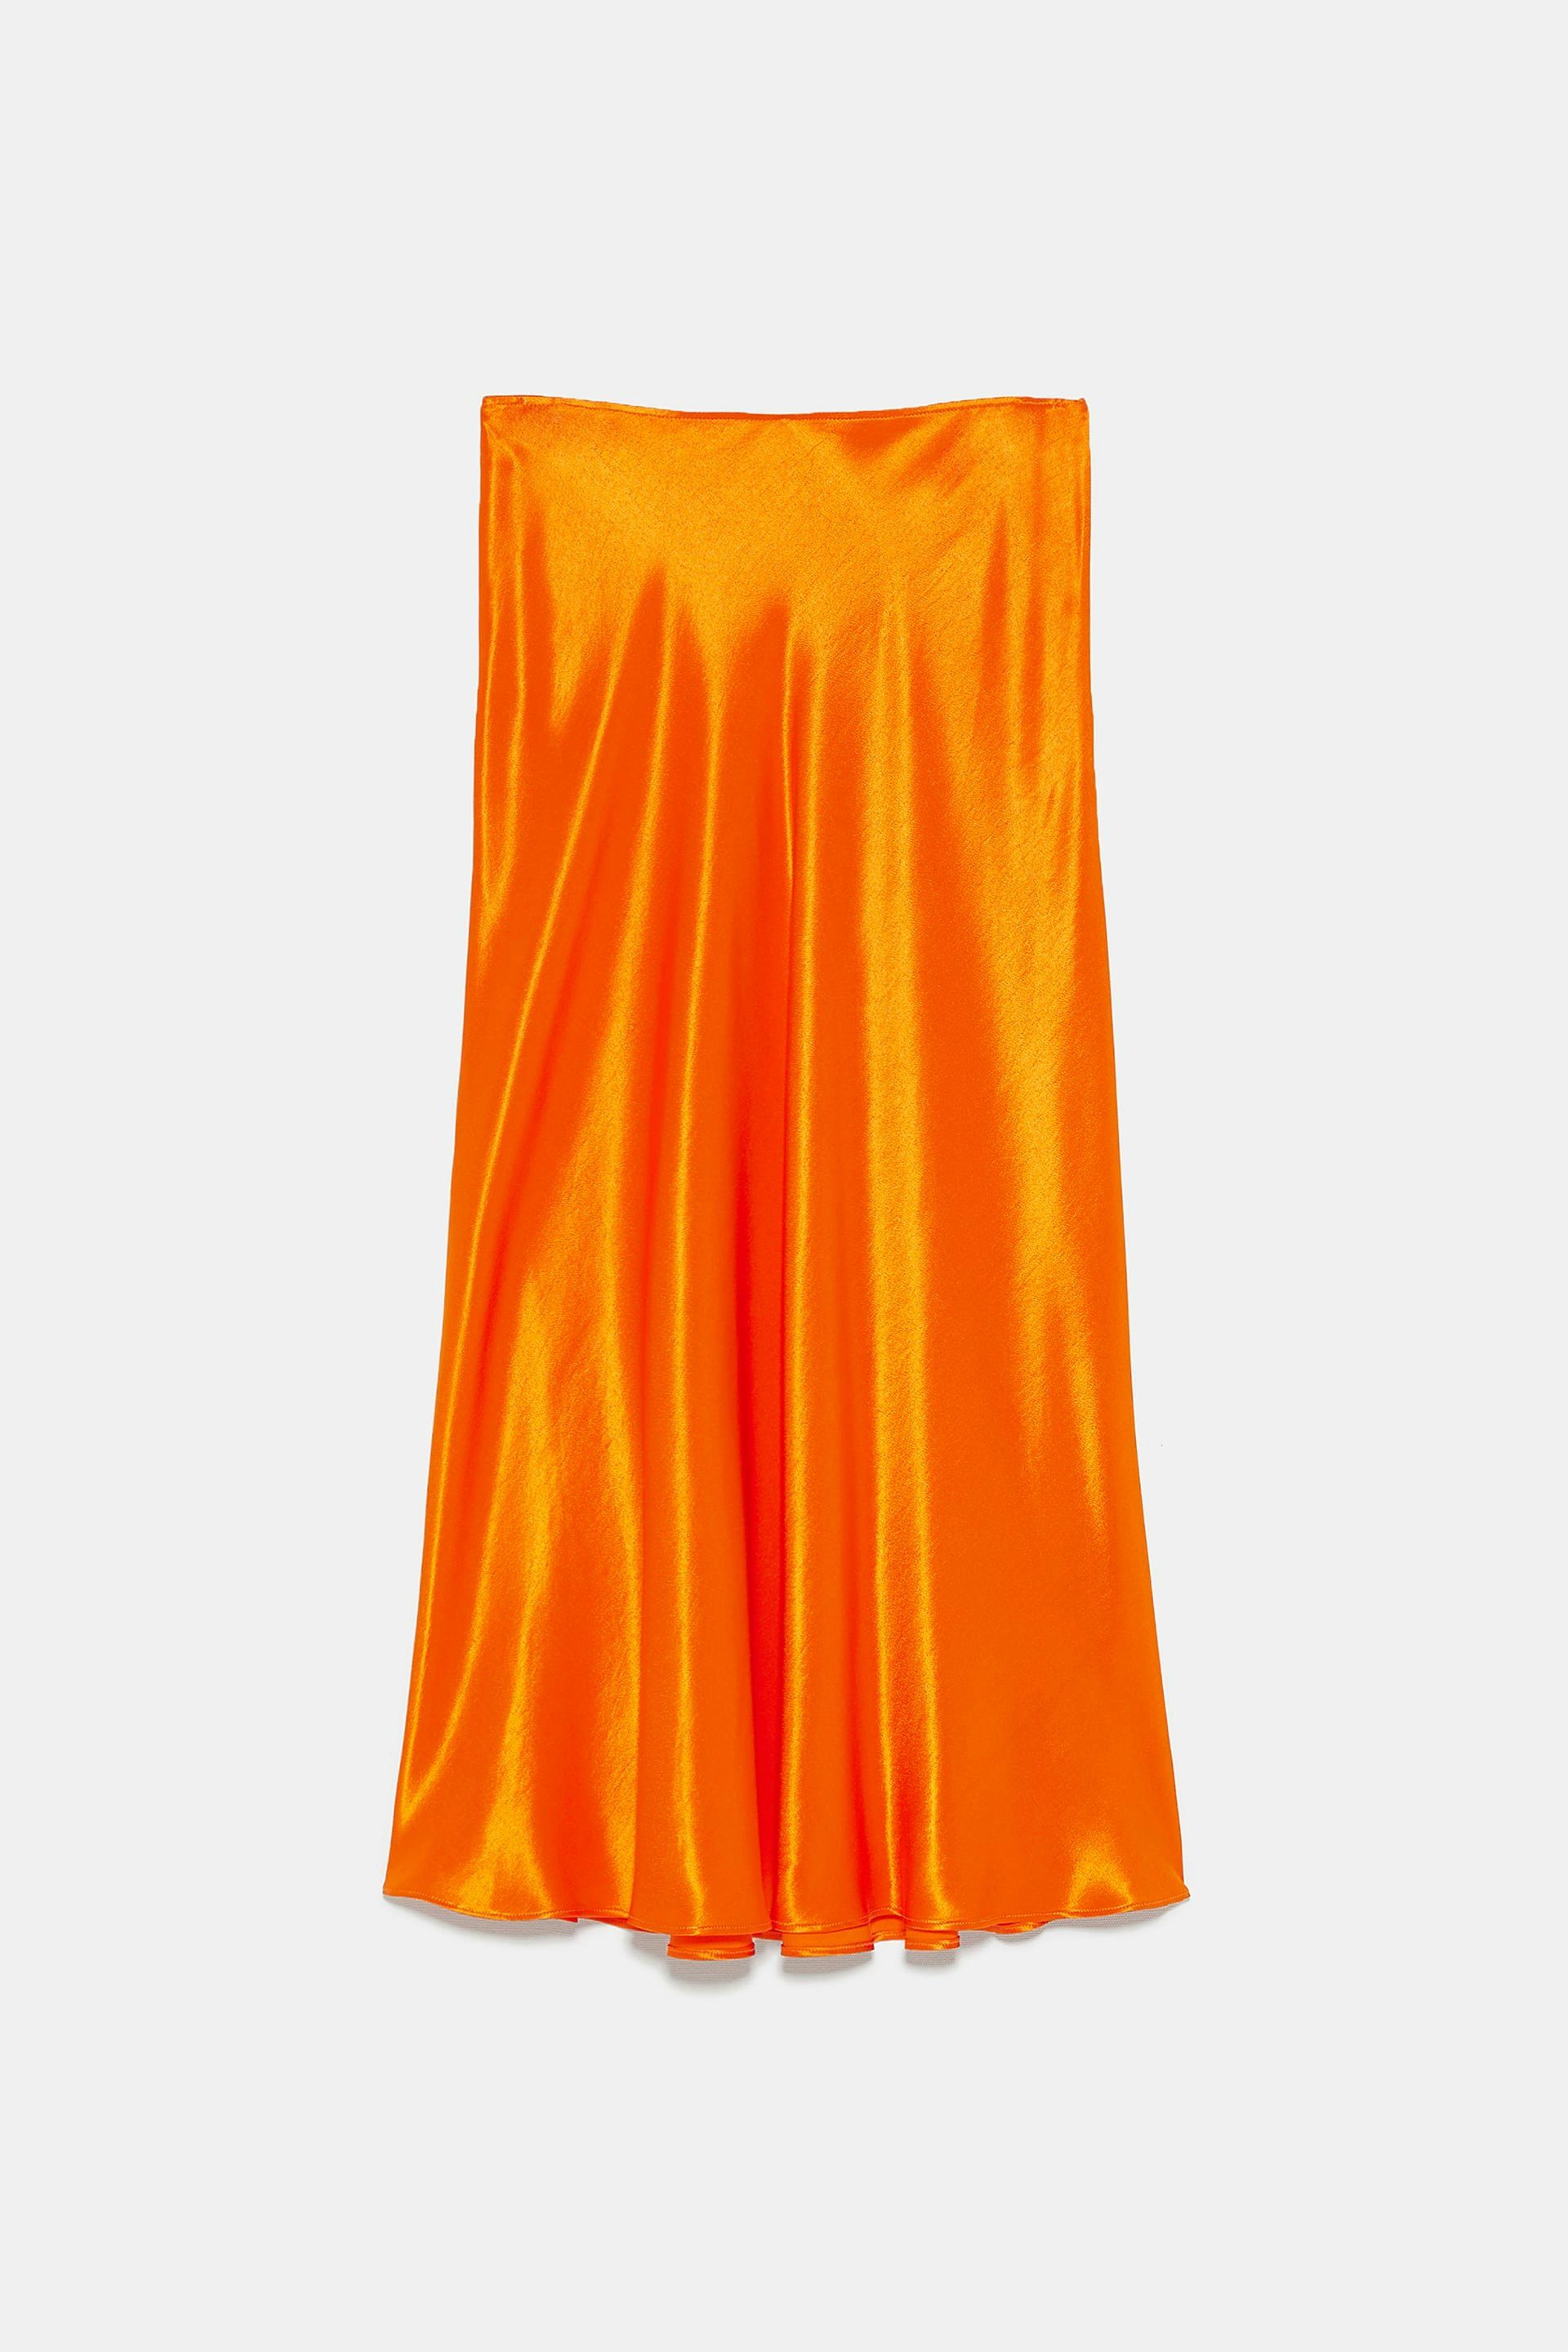 zara orange satin skirt